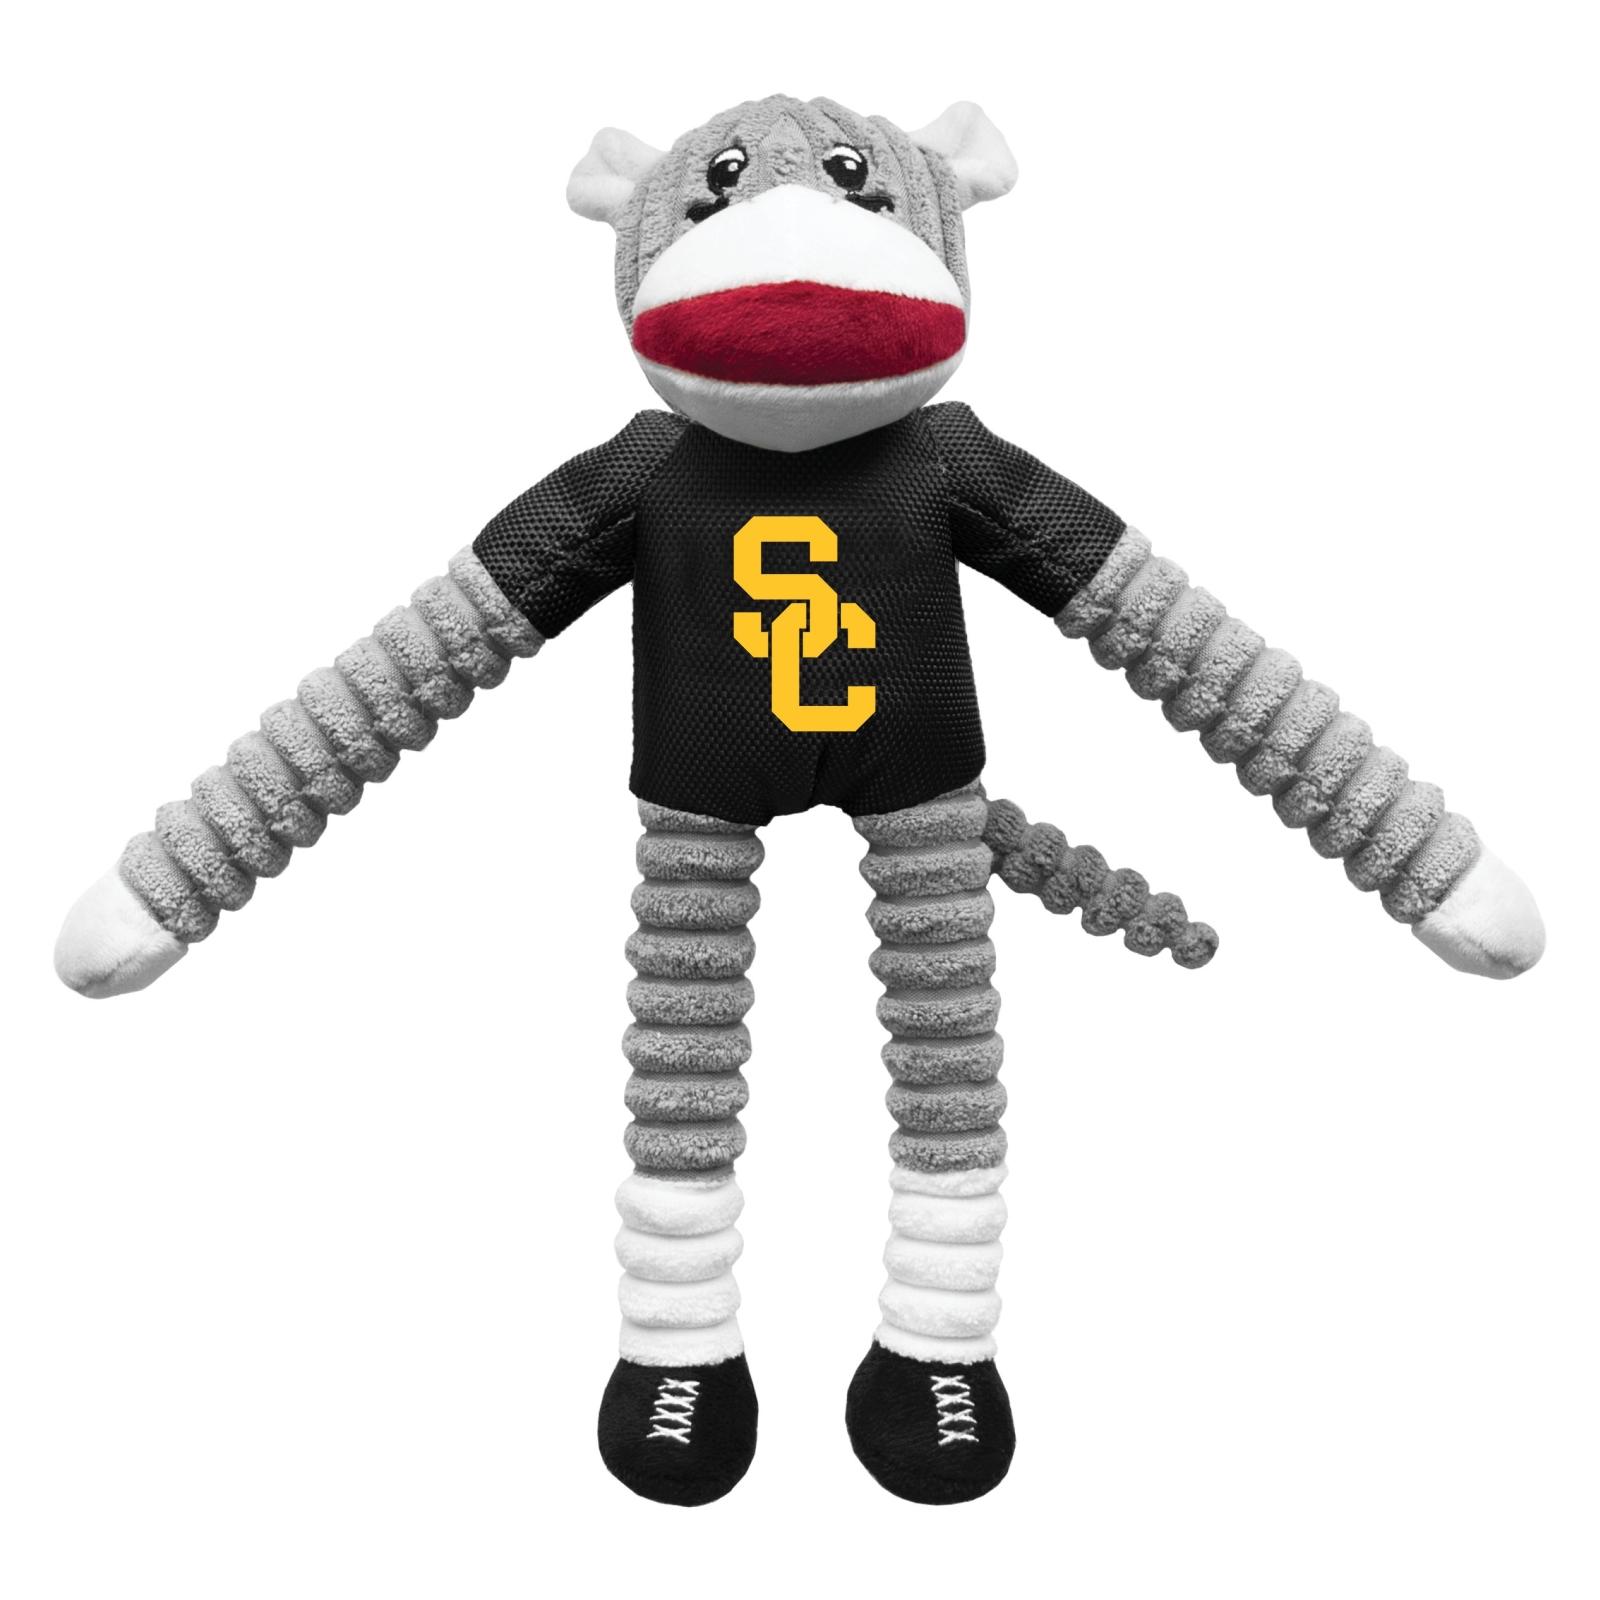 USC Team Sock Monkey Pet Toy image01